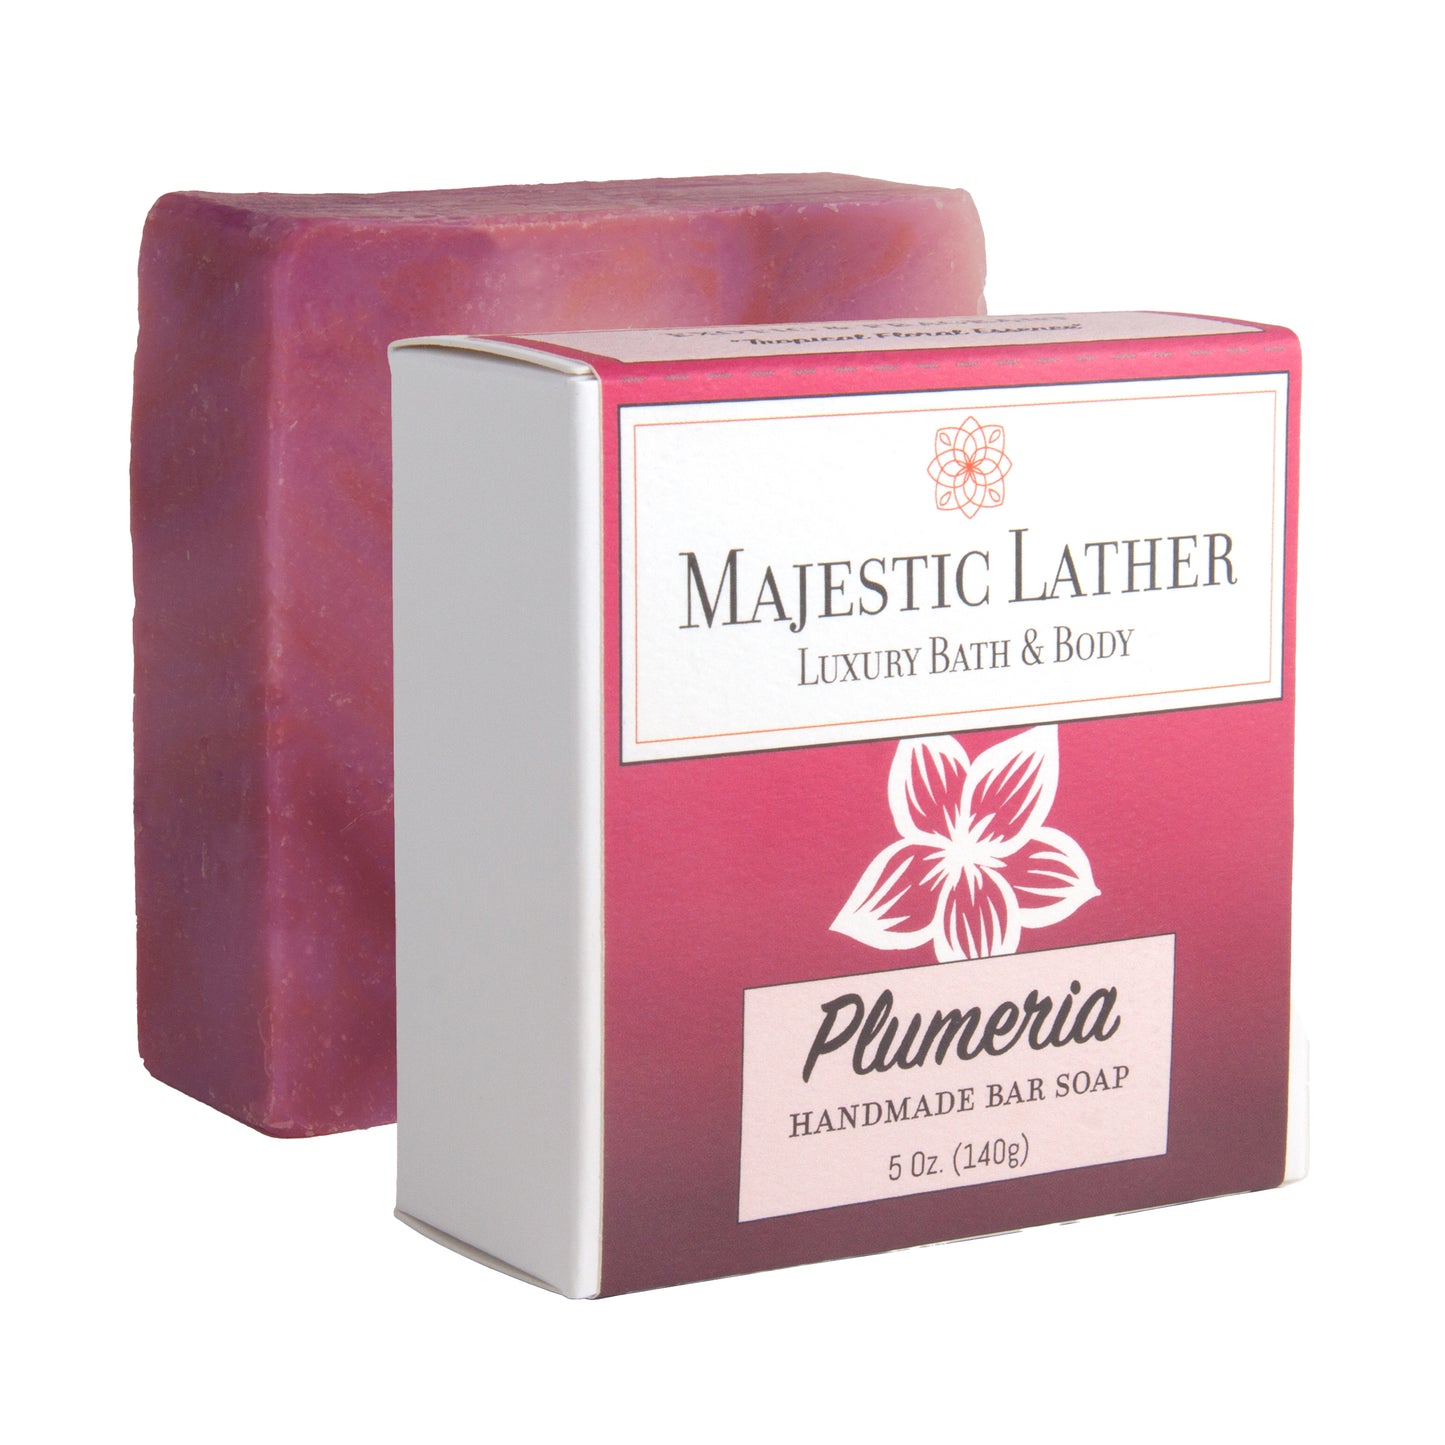 Majestic Lather Plumeria Handmade Bar Soap & Box